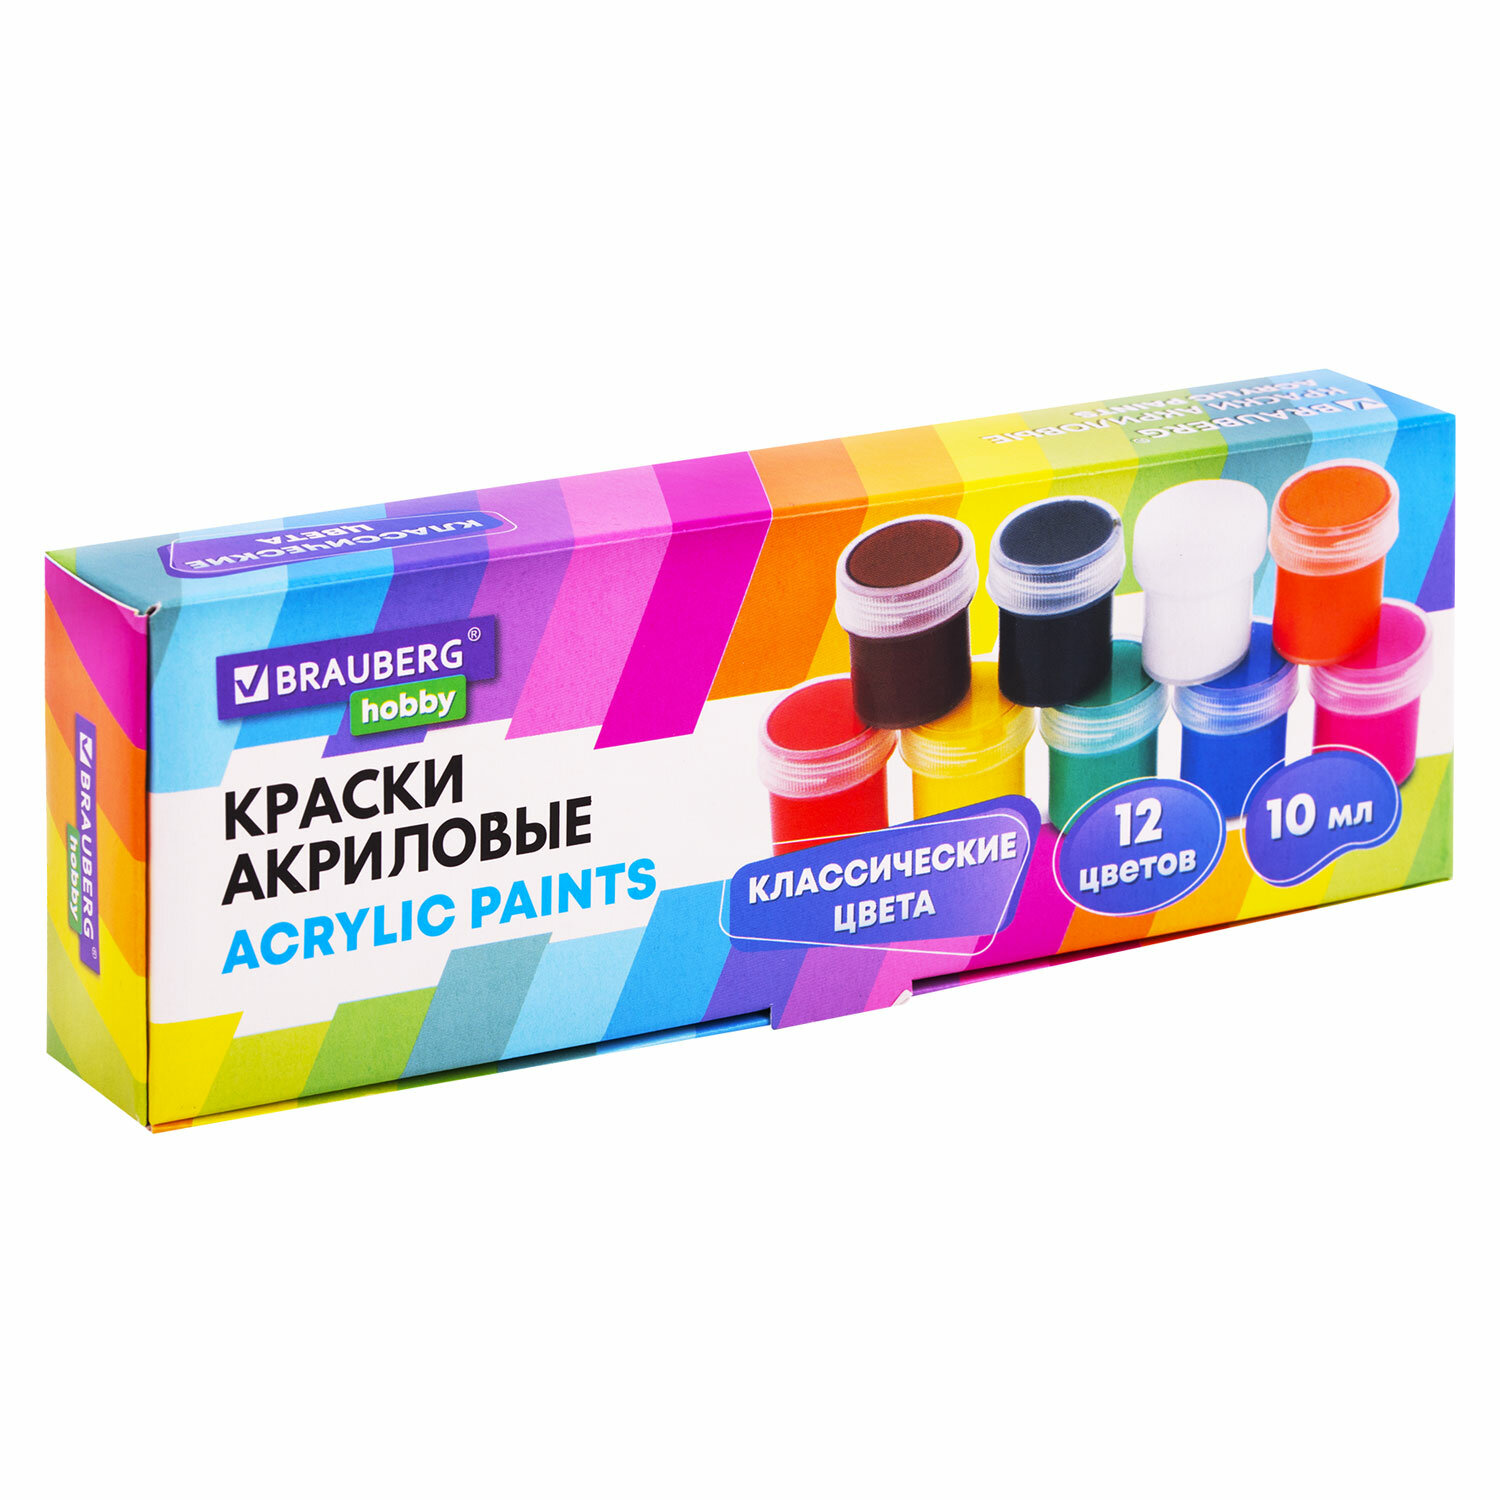 Краски акриловые Brauberg набор для рисования 12 цветов по 10 мл - фото 2